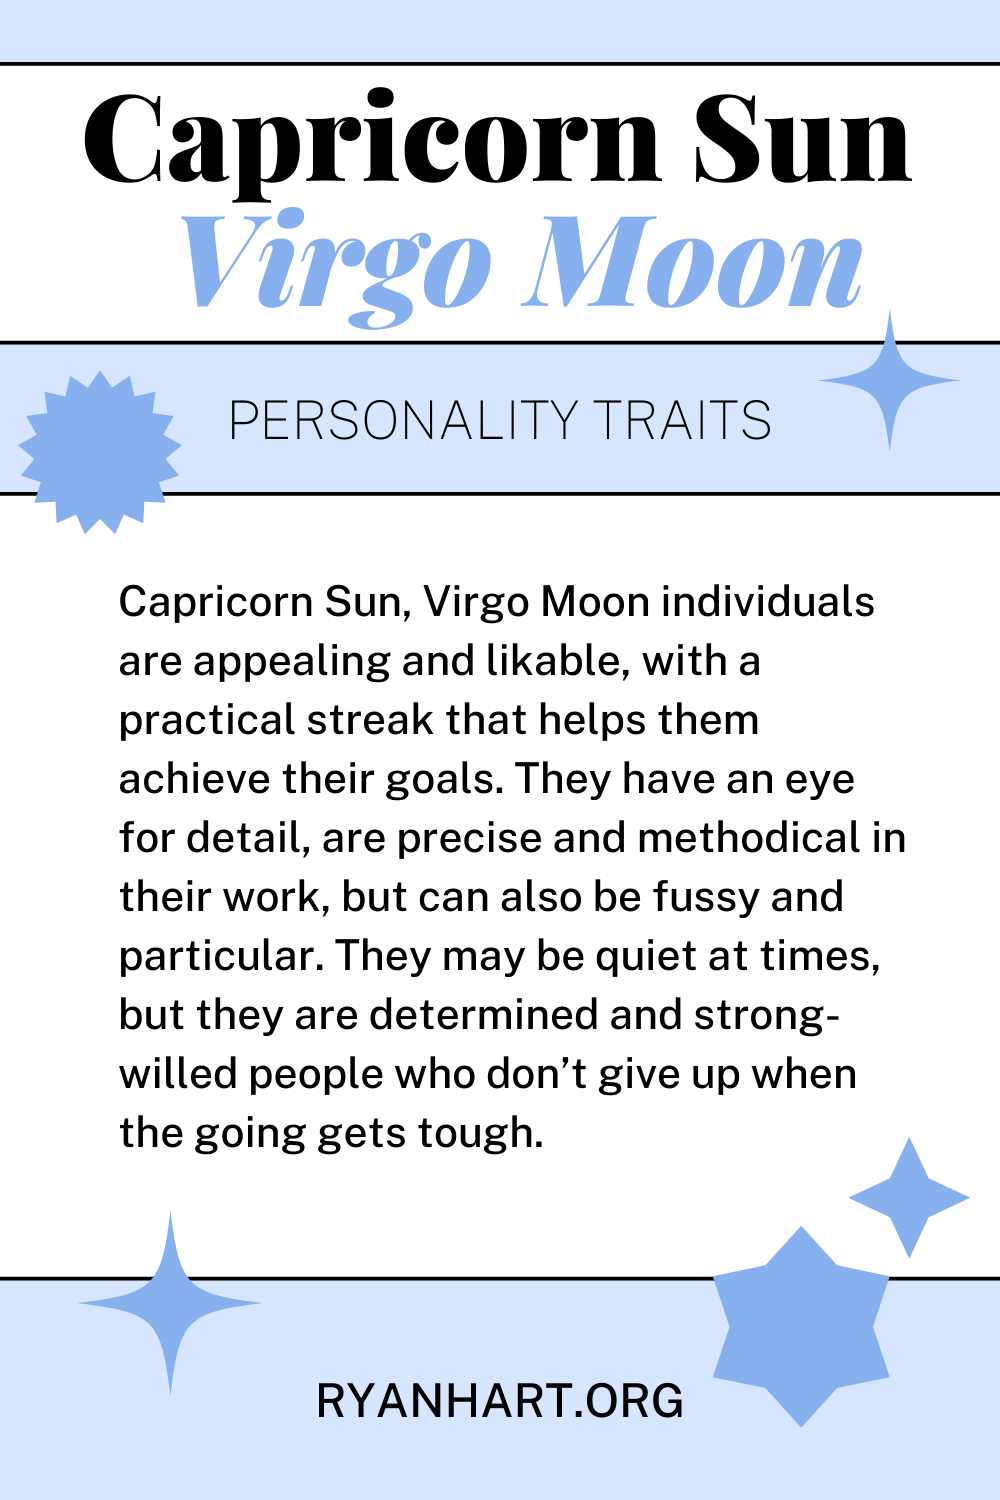  Ciri-ciri Personaliti Capricorn Sun Virgo Moon